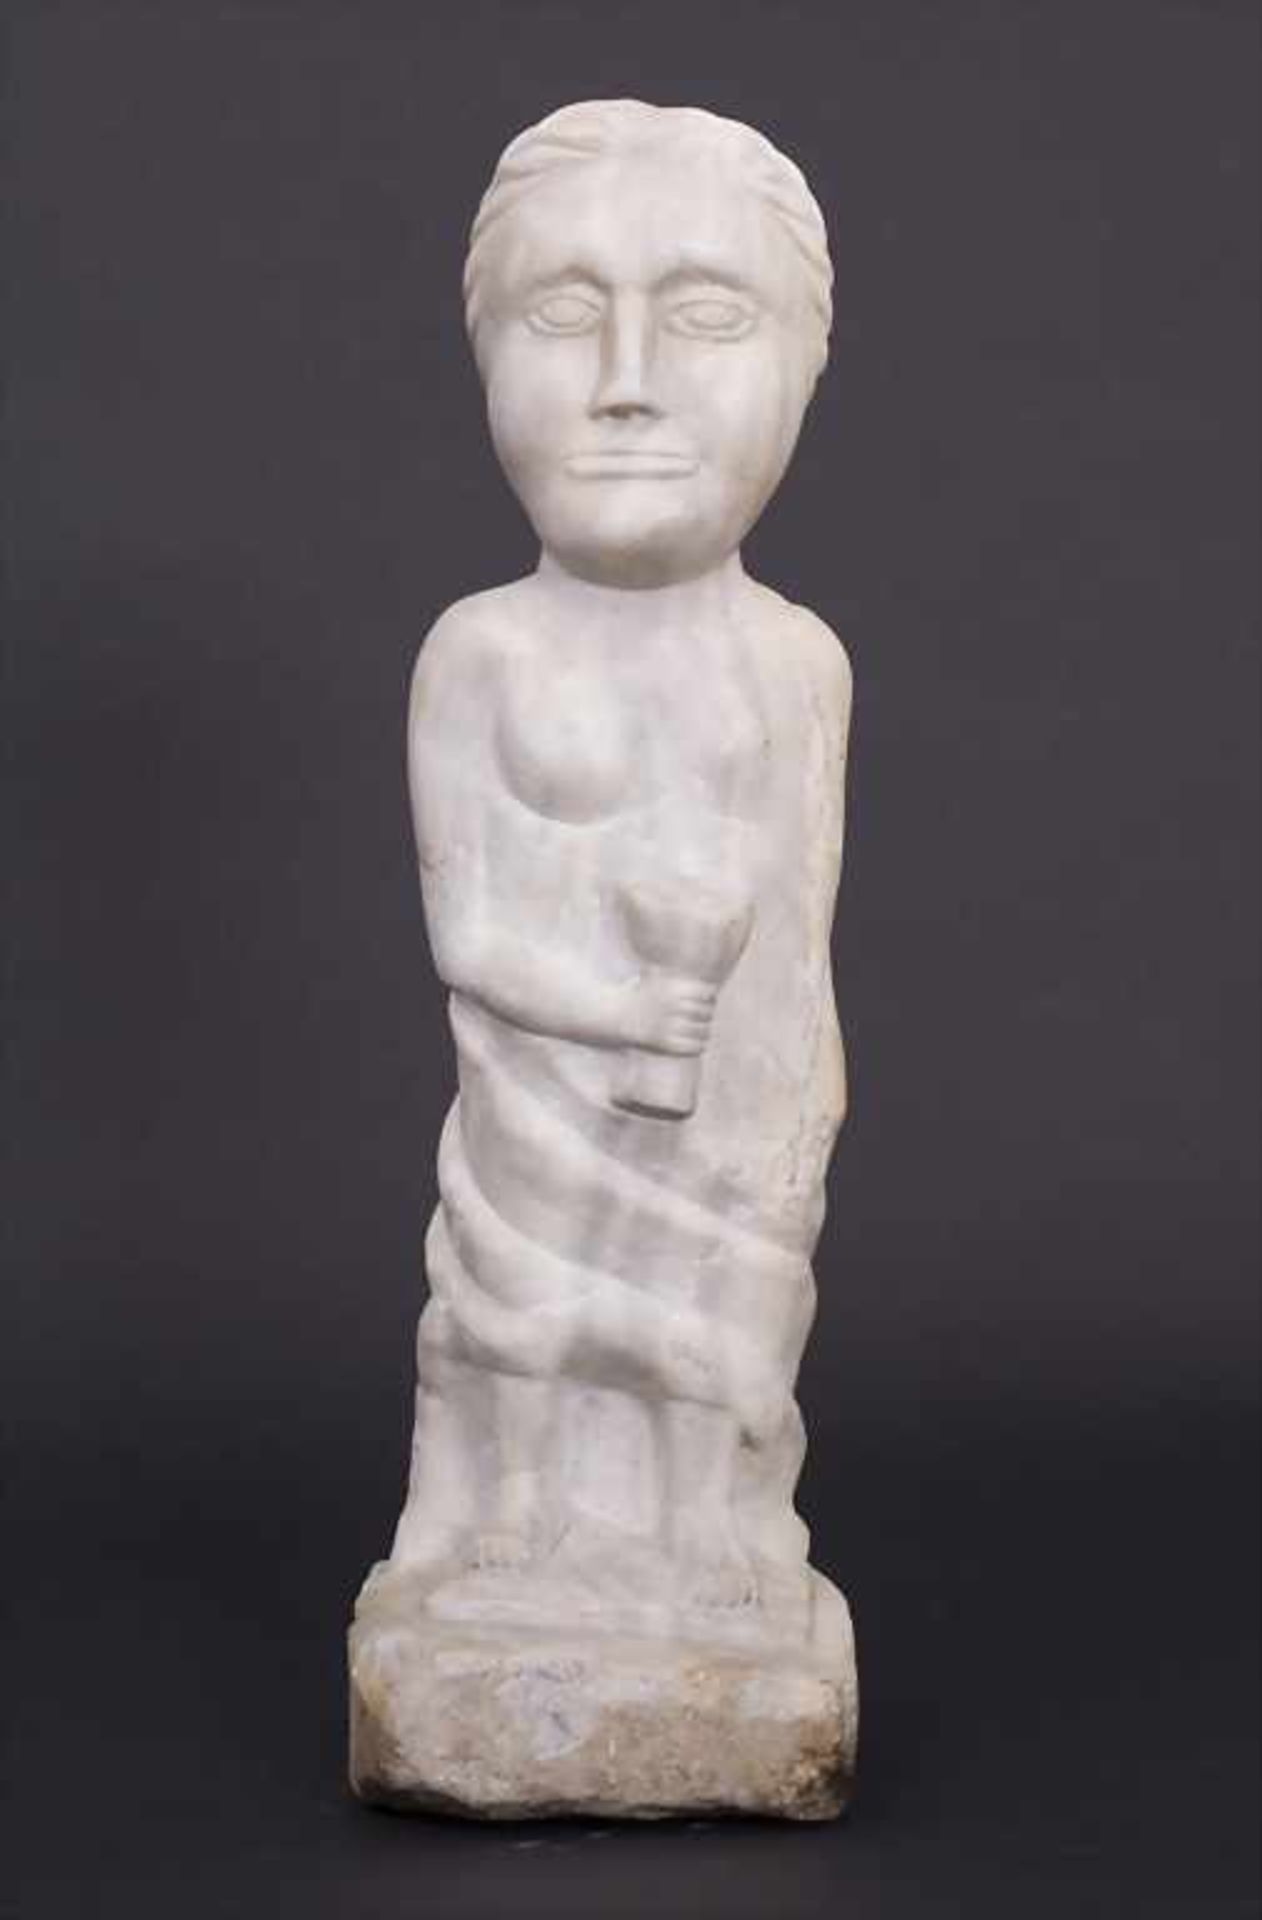 Marmorstatue 'Bacchantin' Frankreich, 16./17. Jh.Material: Heller Marmor, grau geädert,Höhe: 48 cm,